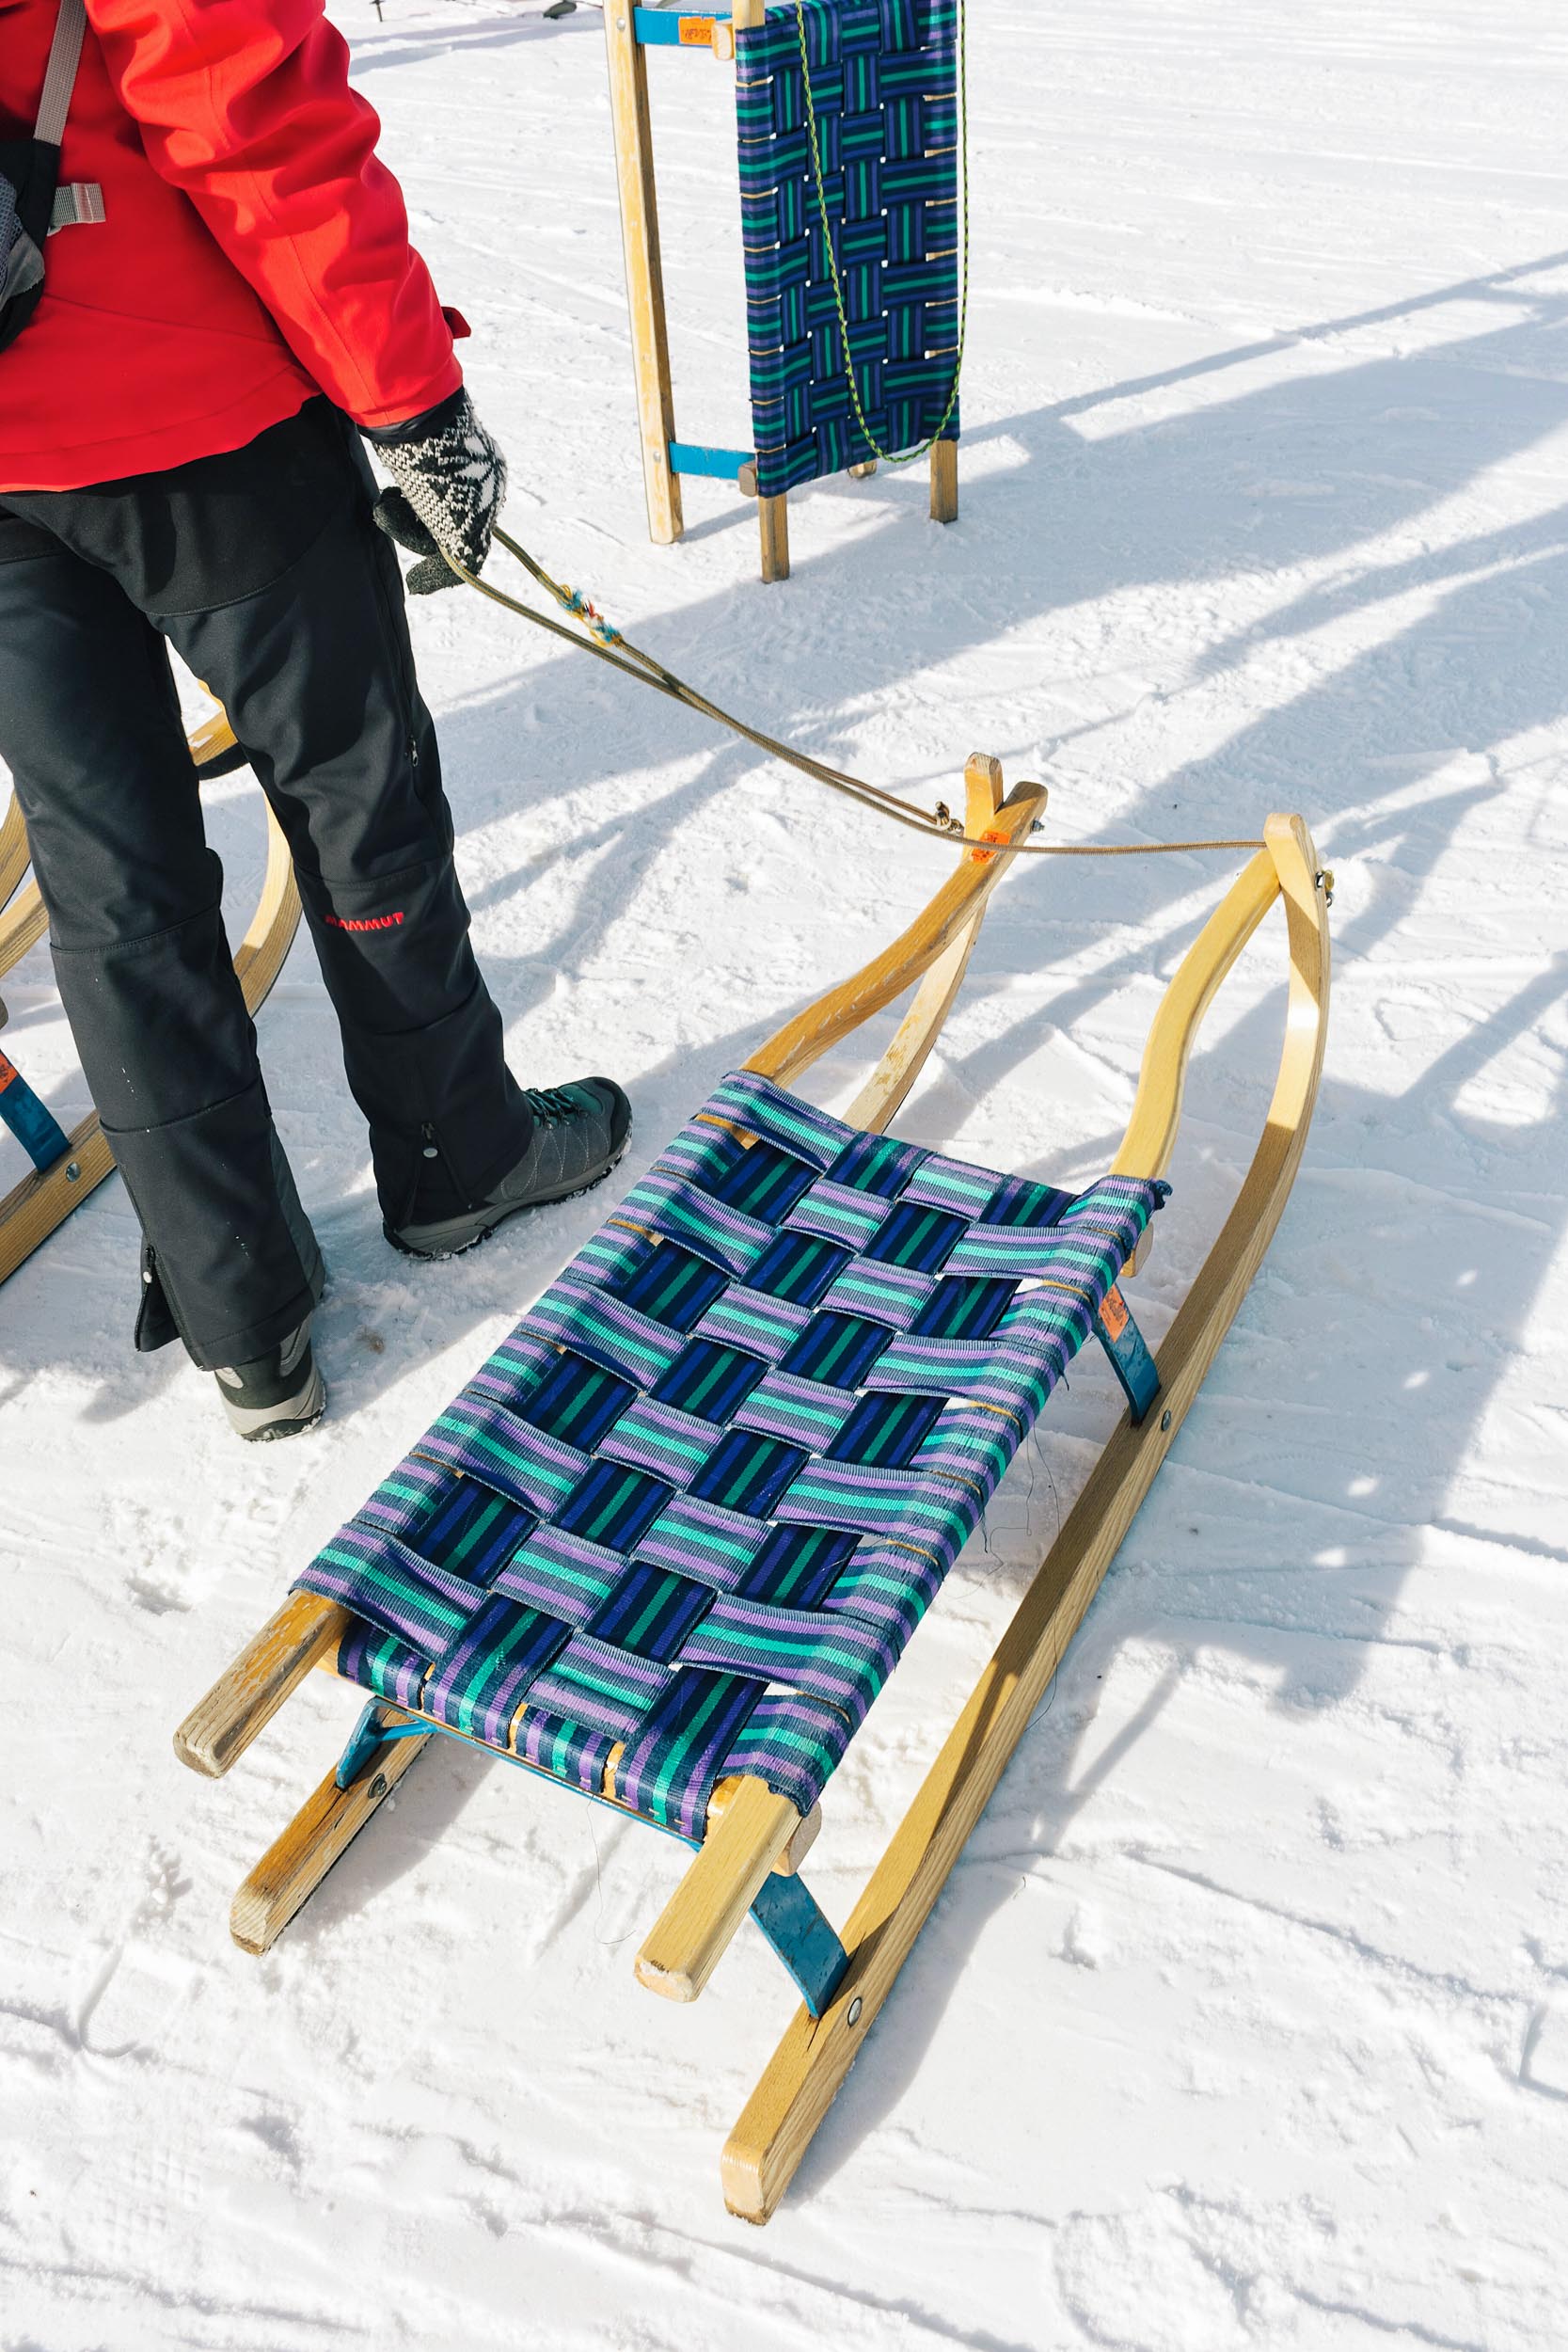 Our sledges, rented from Wyss Sports in Kleine Schiedegg